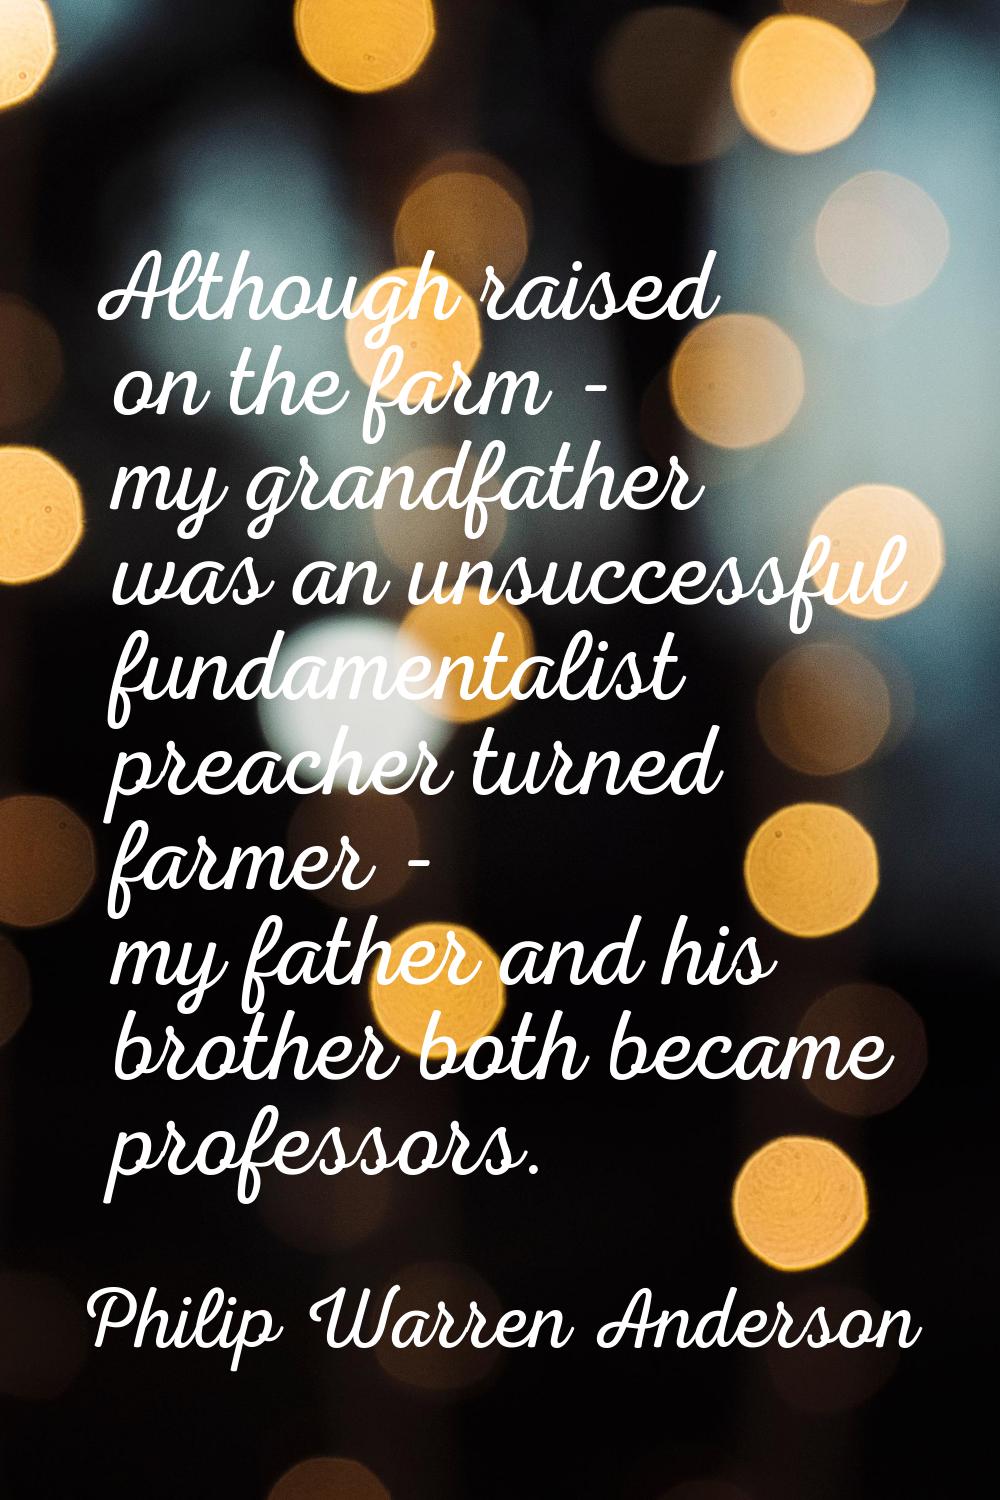 Although raised on the farm - my grandfather was an unsuccessful fundamentalist preacher turned far